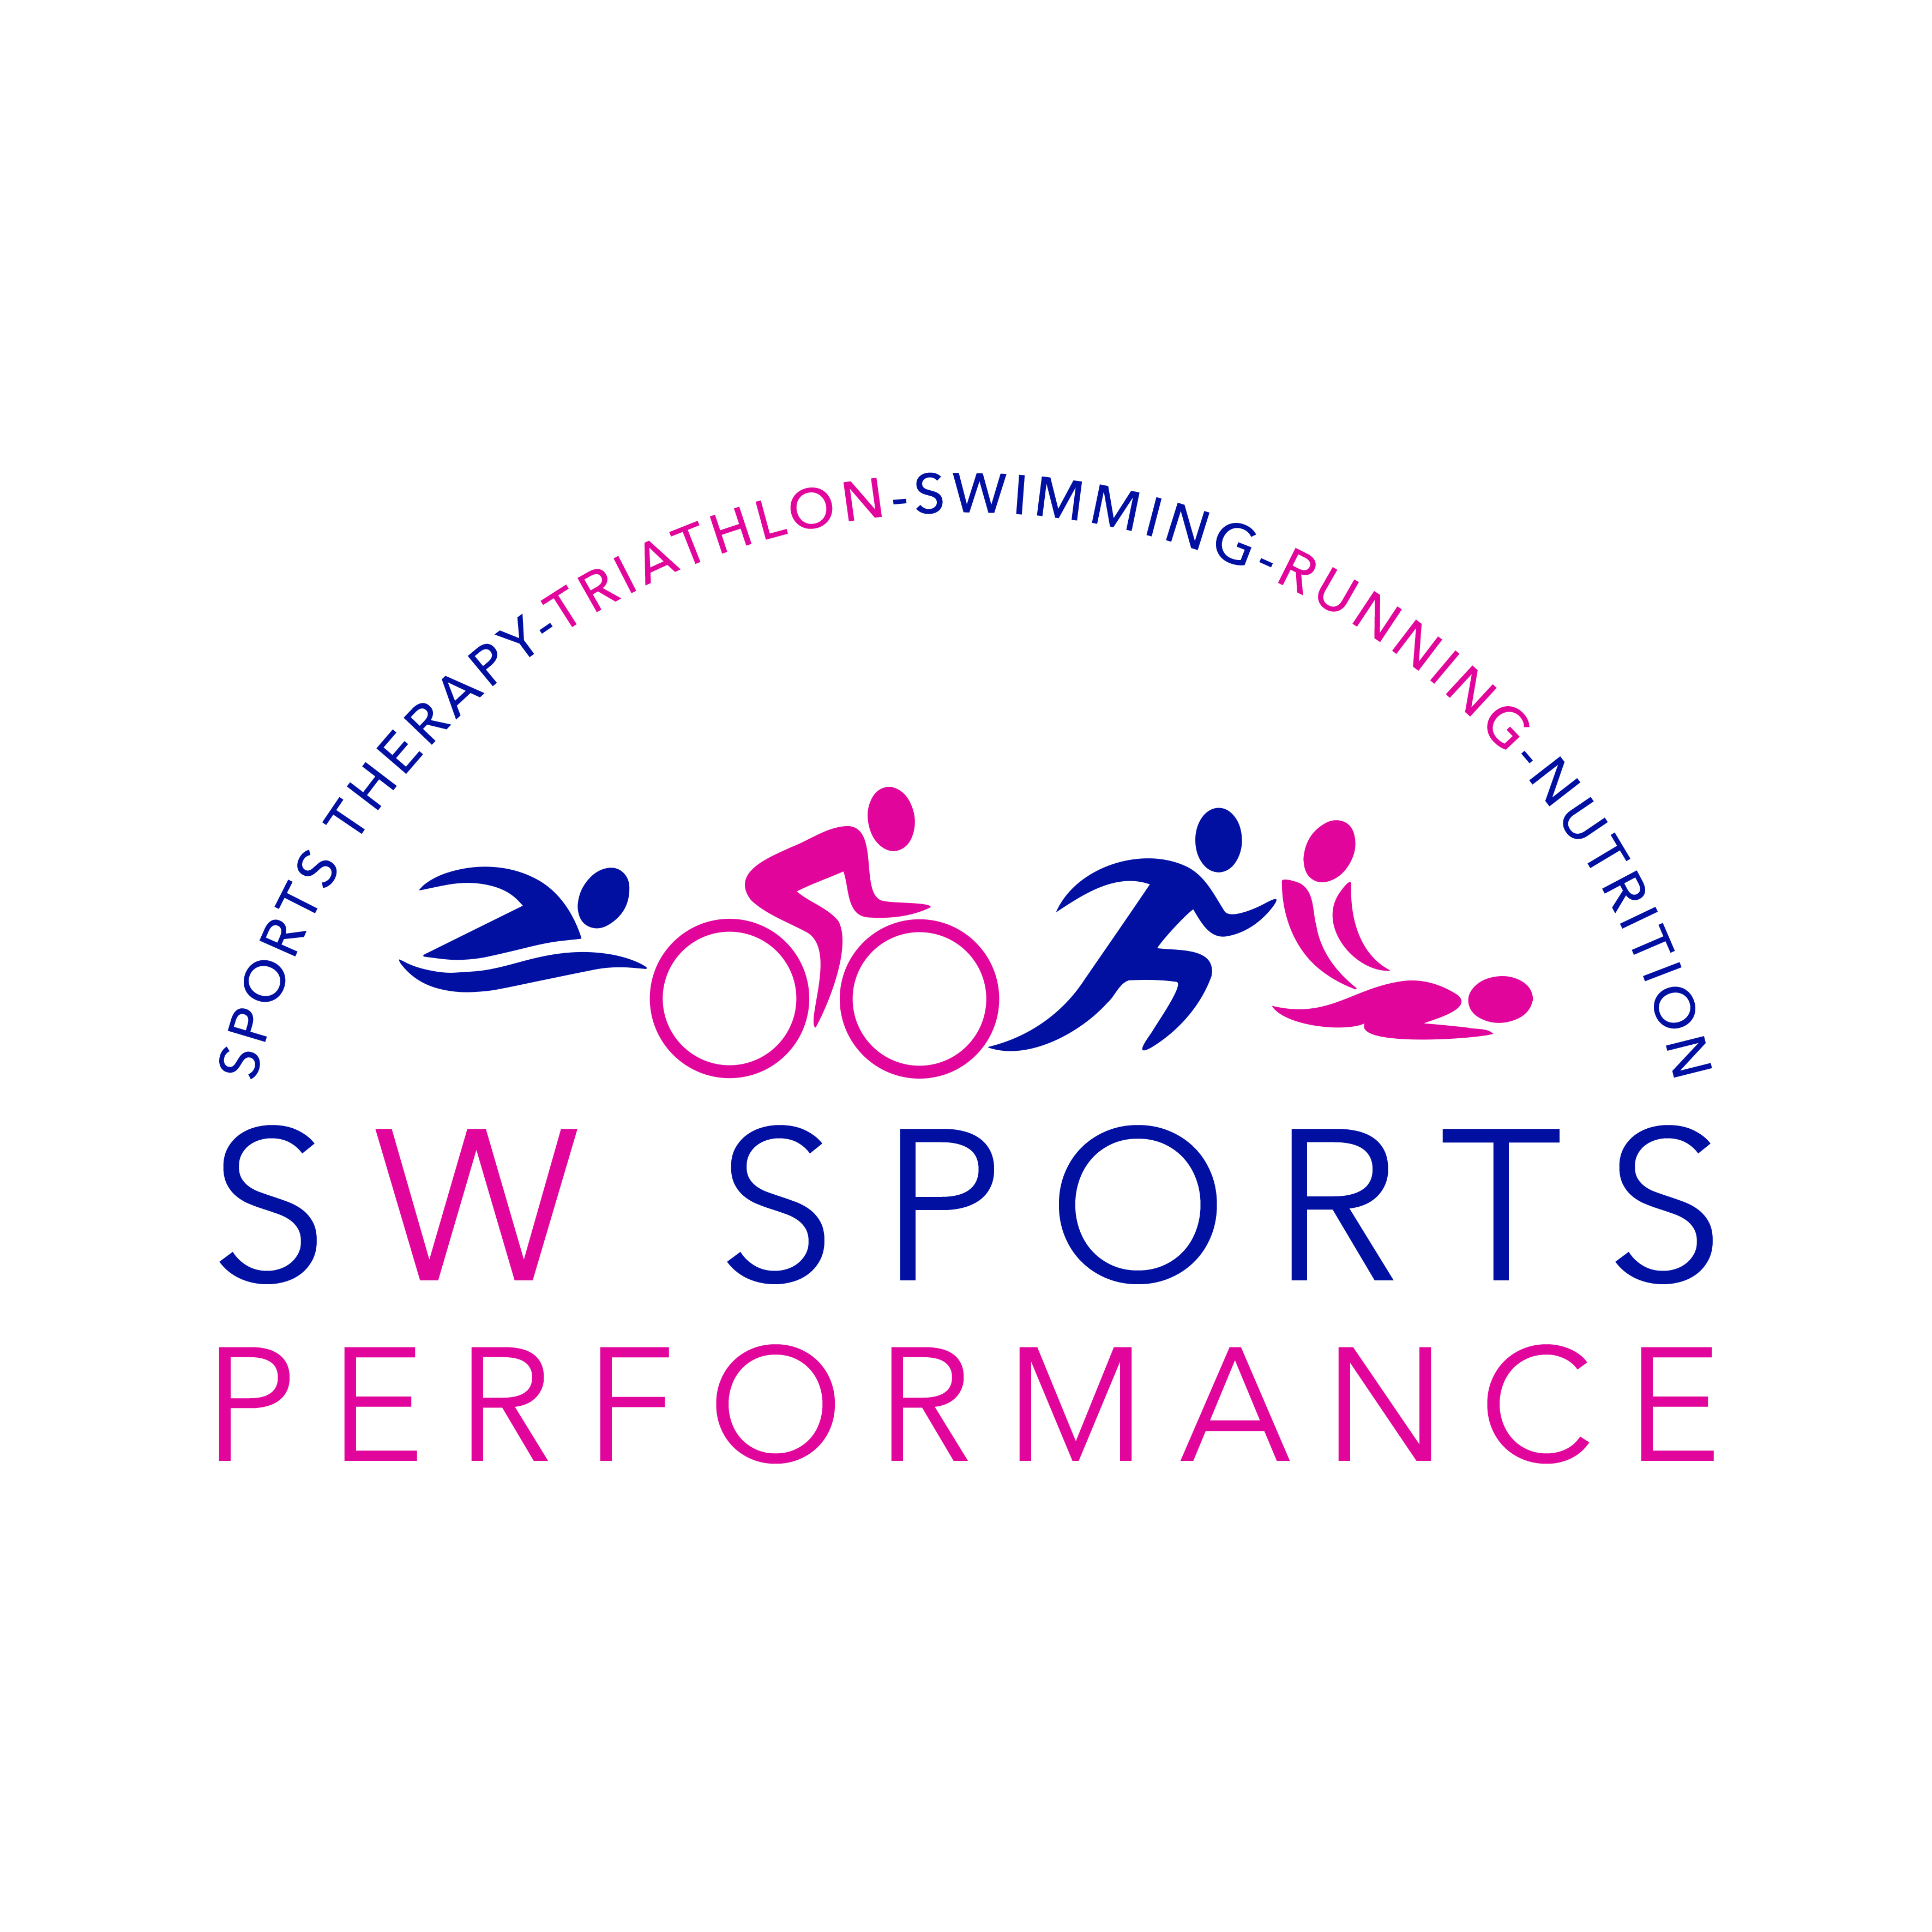 SW Sports Performance Submark CMYK